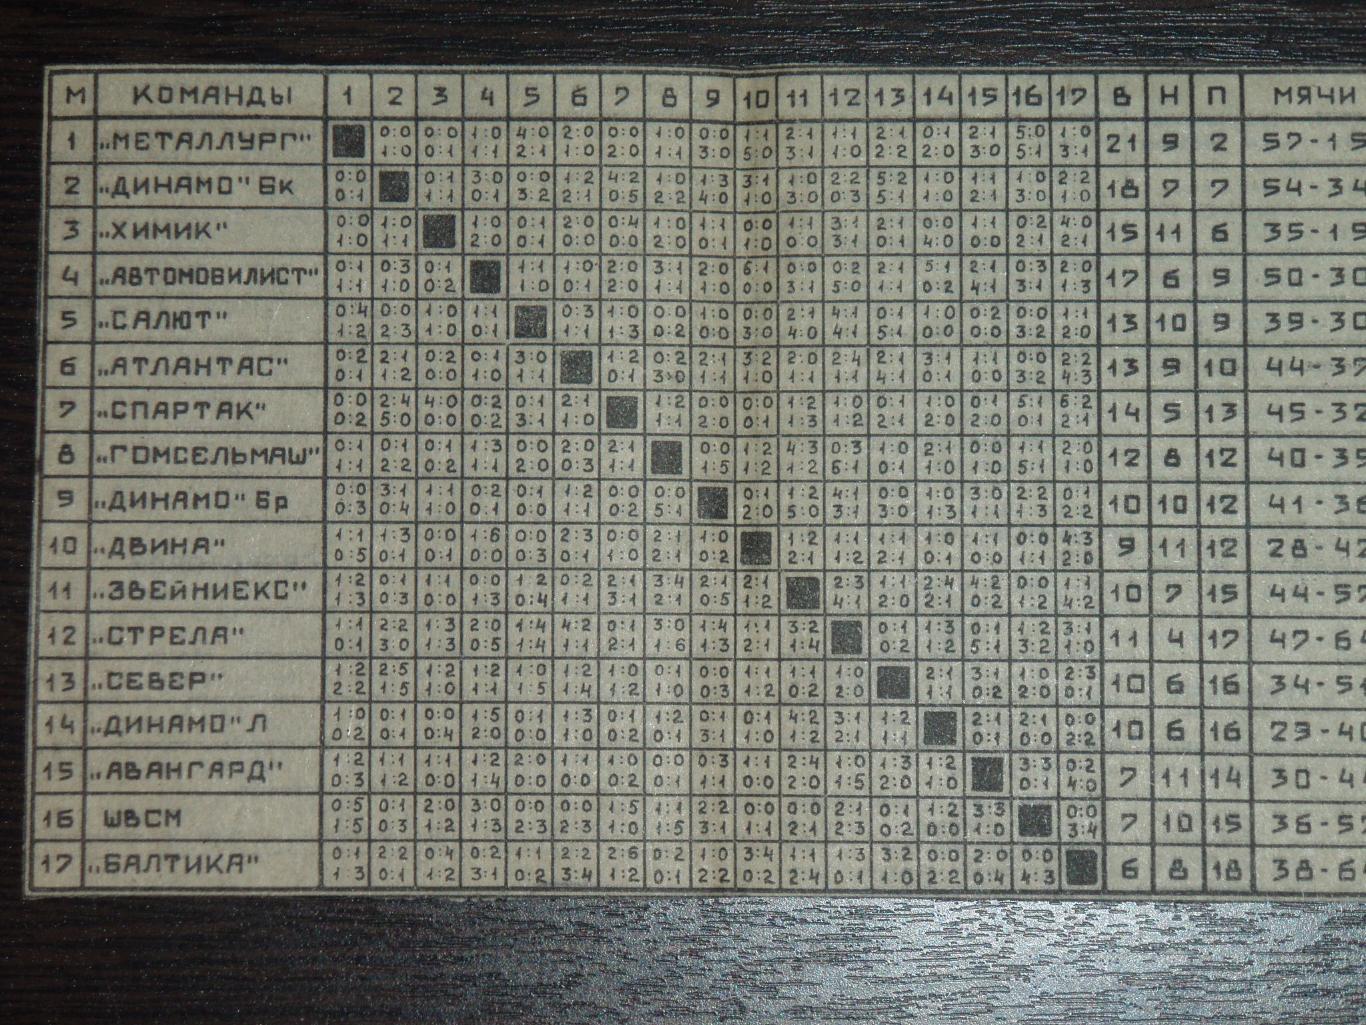 Шахматка 2 лига 5 зона 1983 год